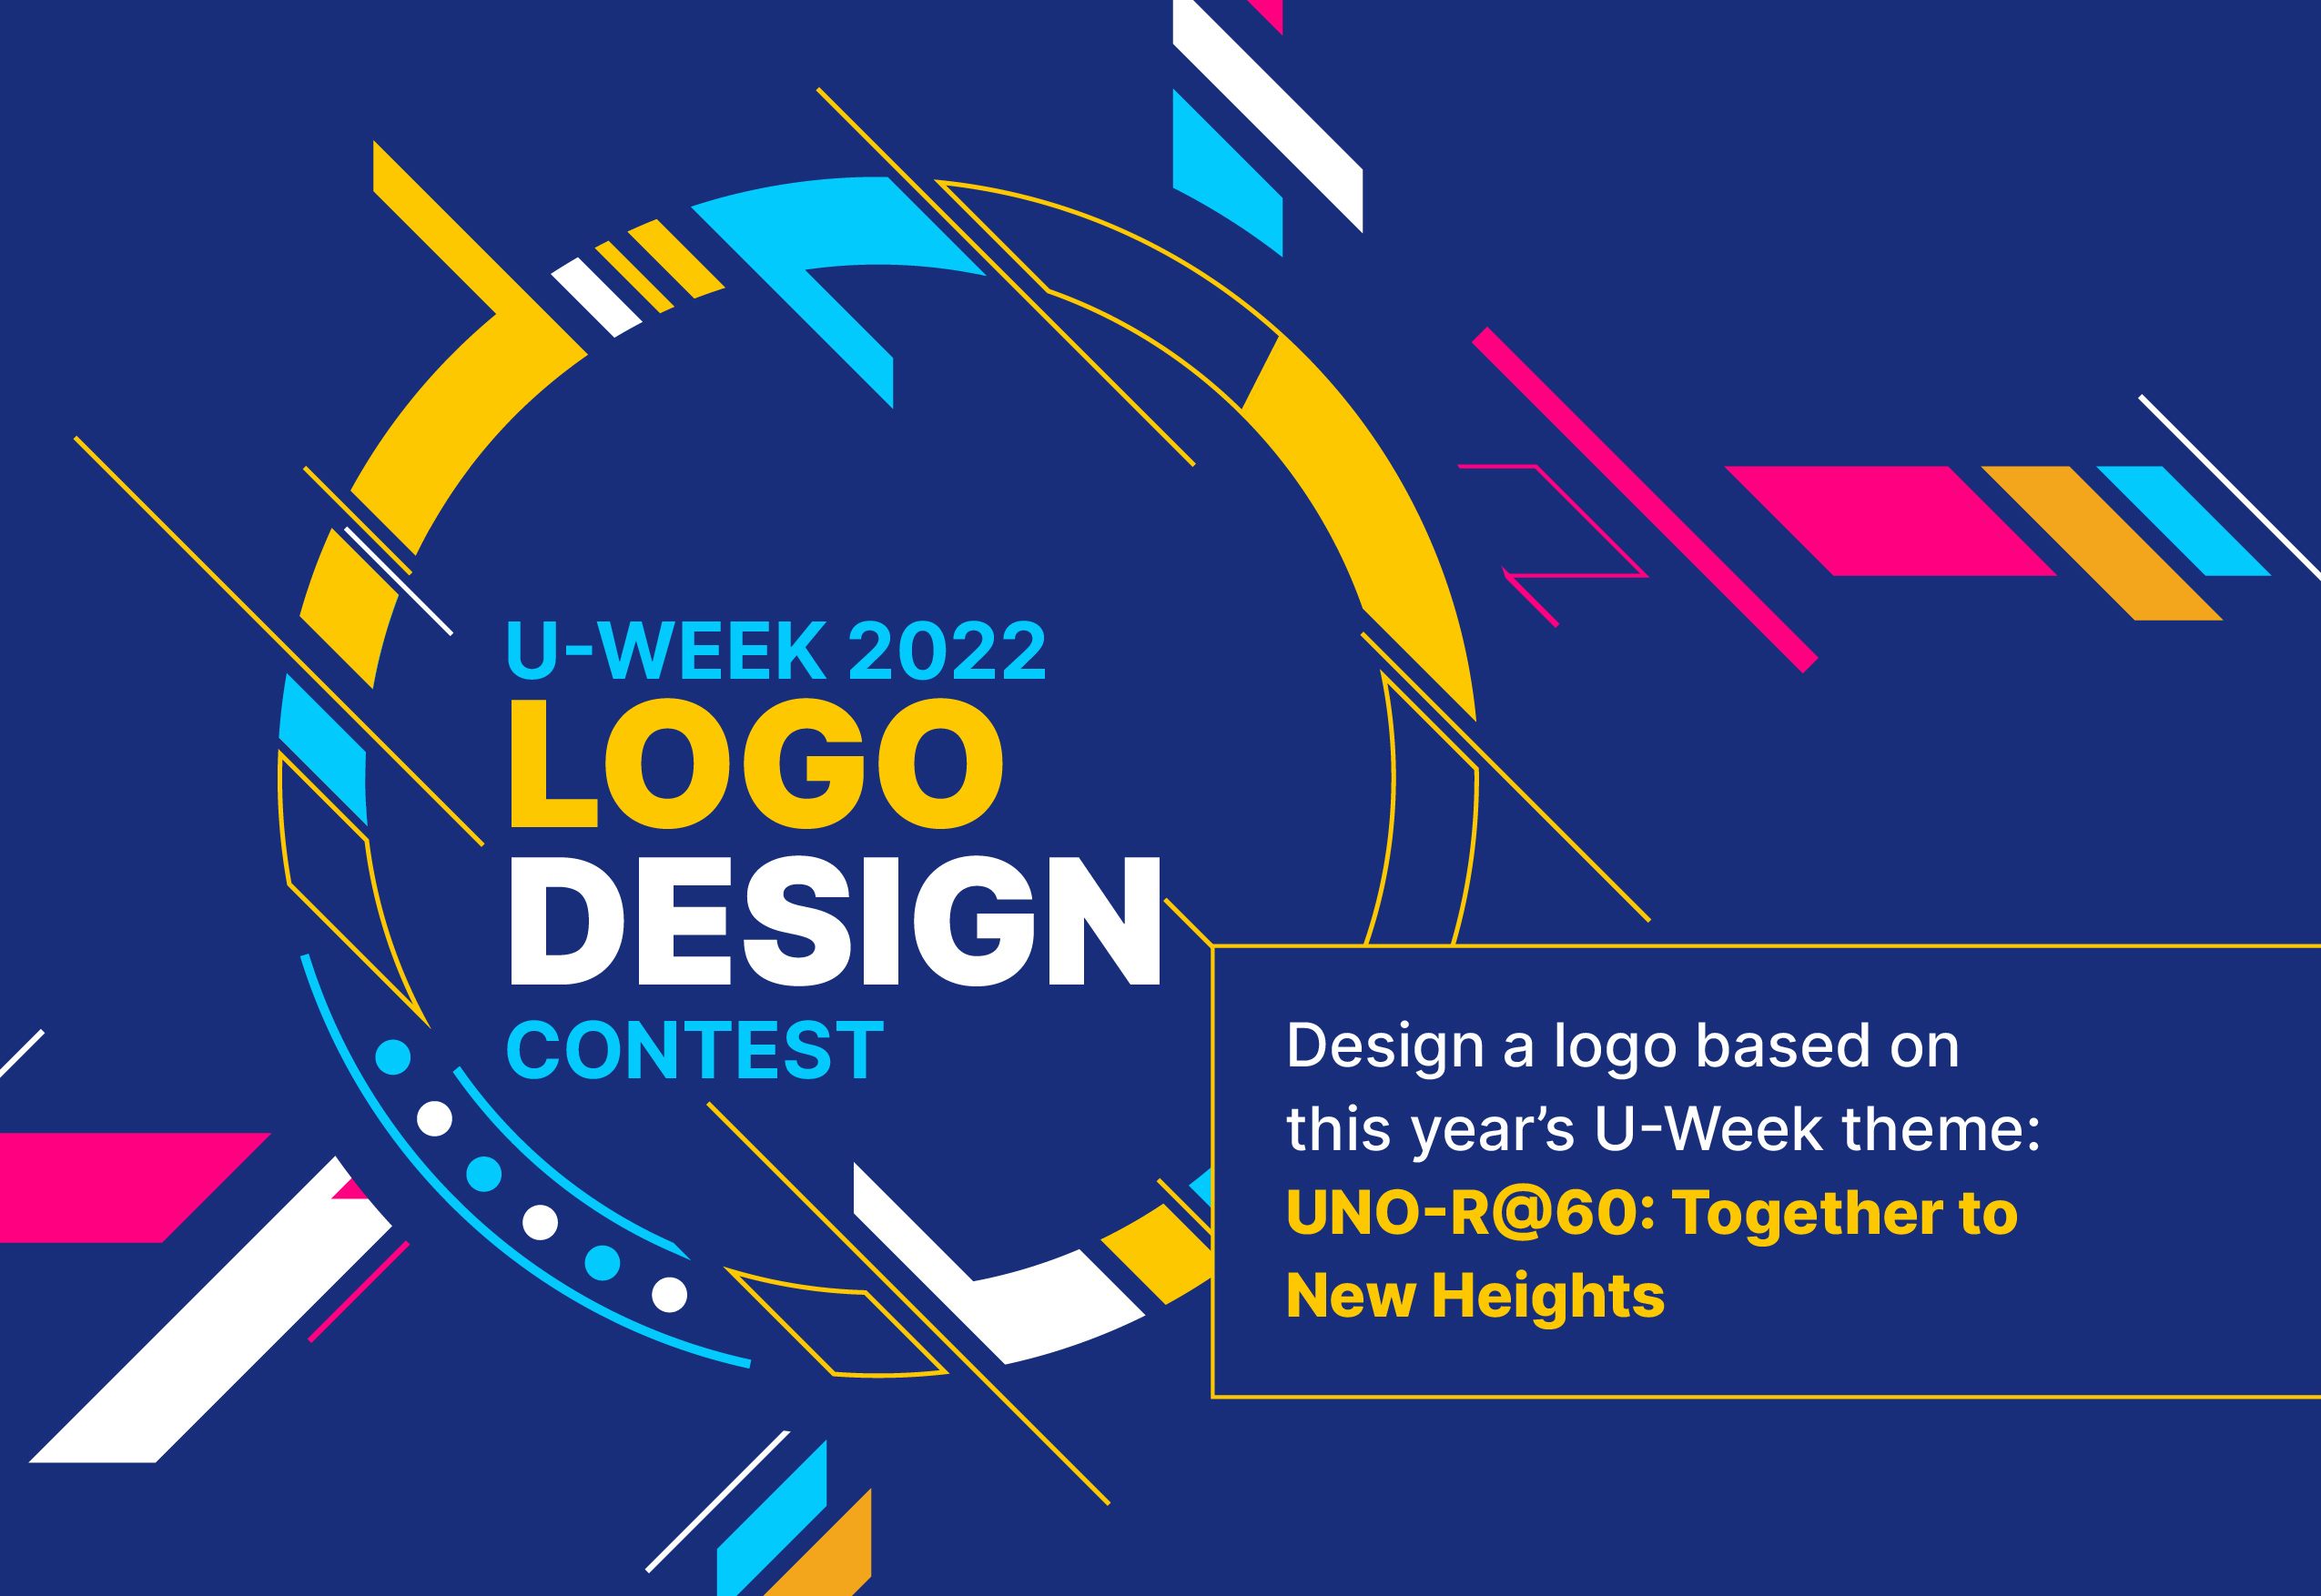 design contest logo